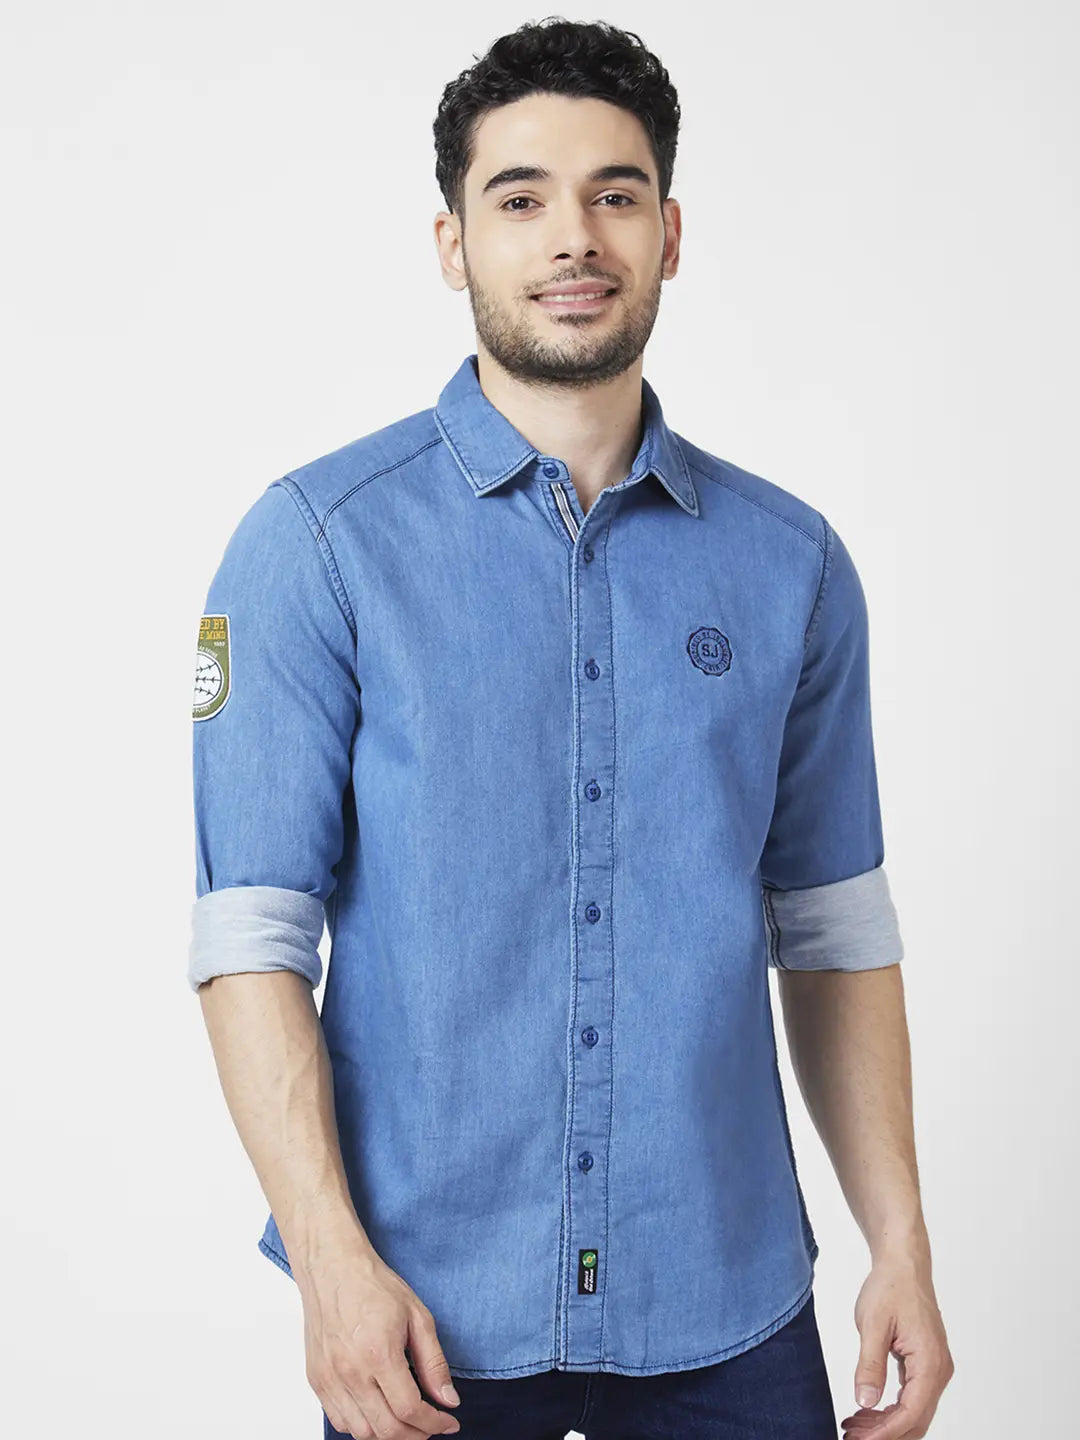 Buy Van Heusen Blue Cotton Slim Fit Denim Jacket for Mens Online @ Tata CLiQ